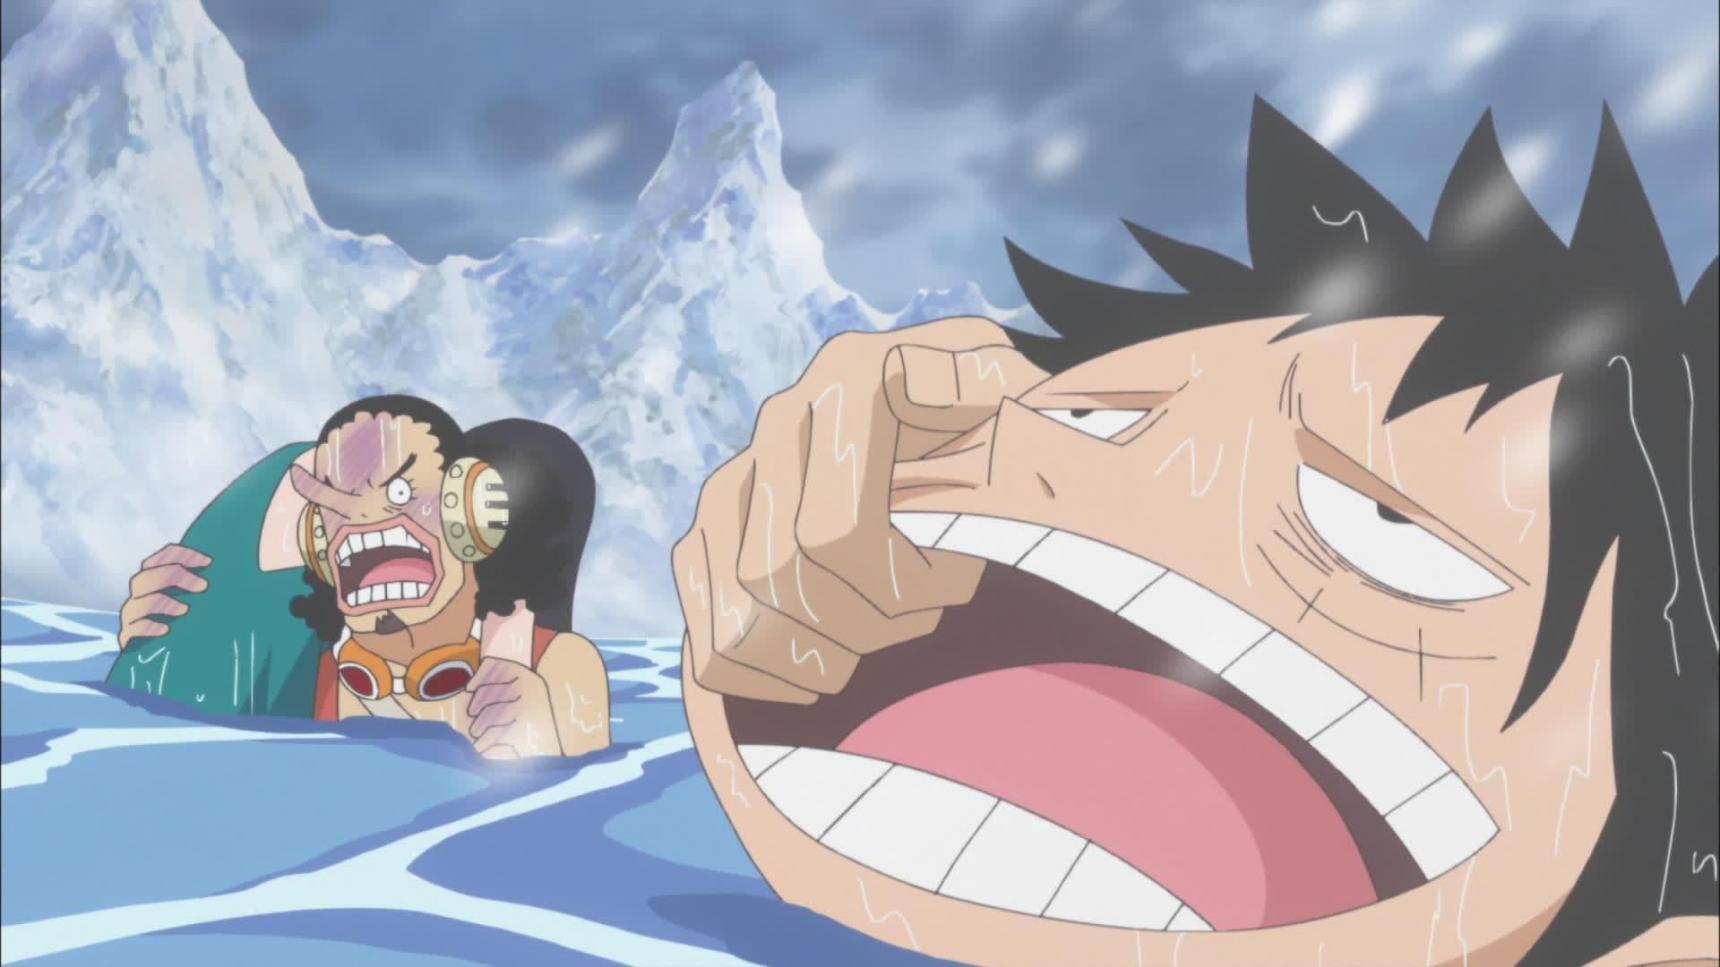 Poster del episodio 586 de One Piece online